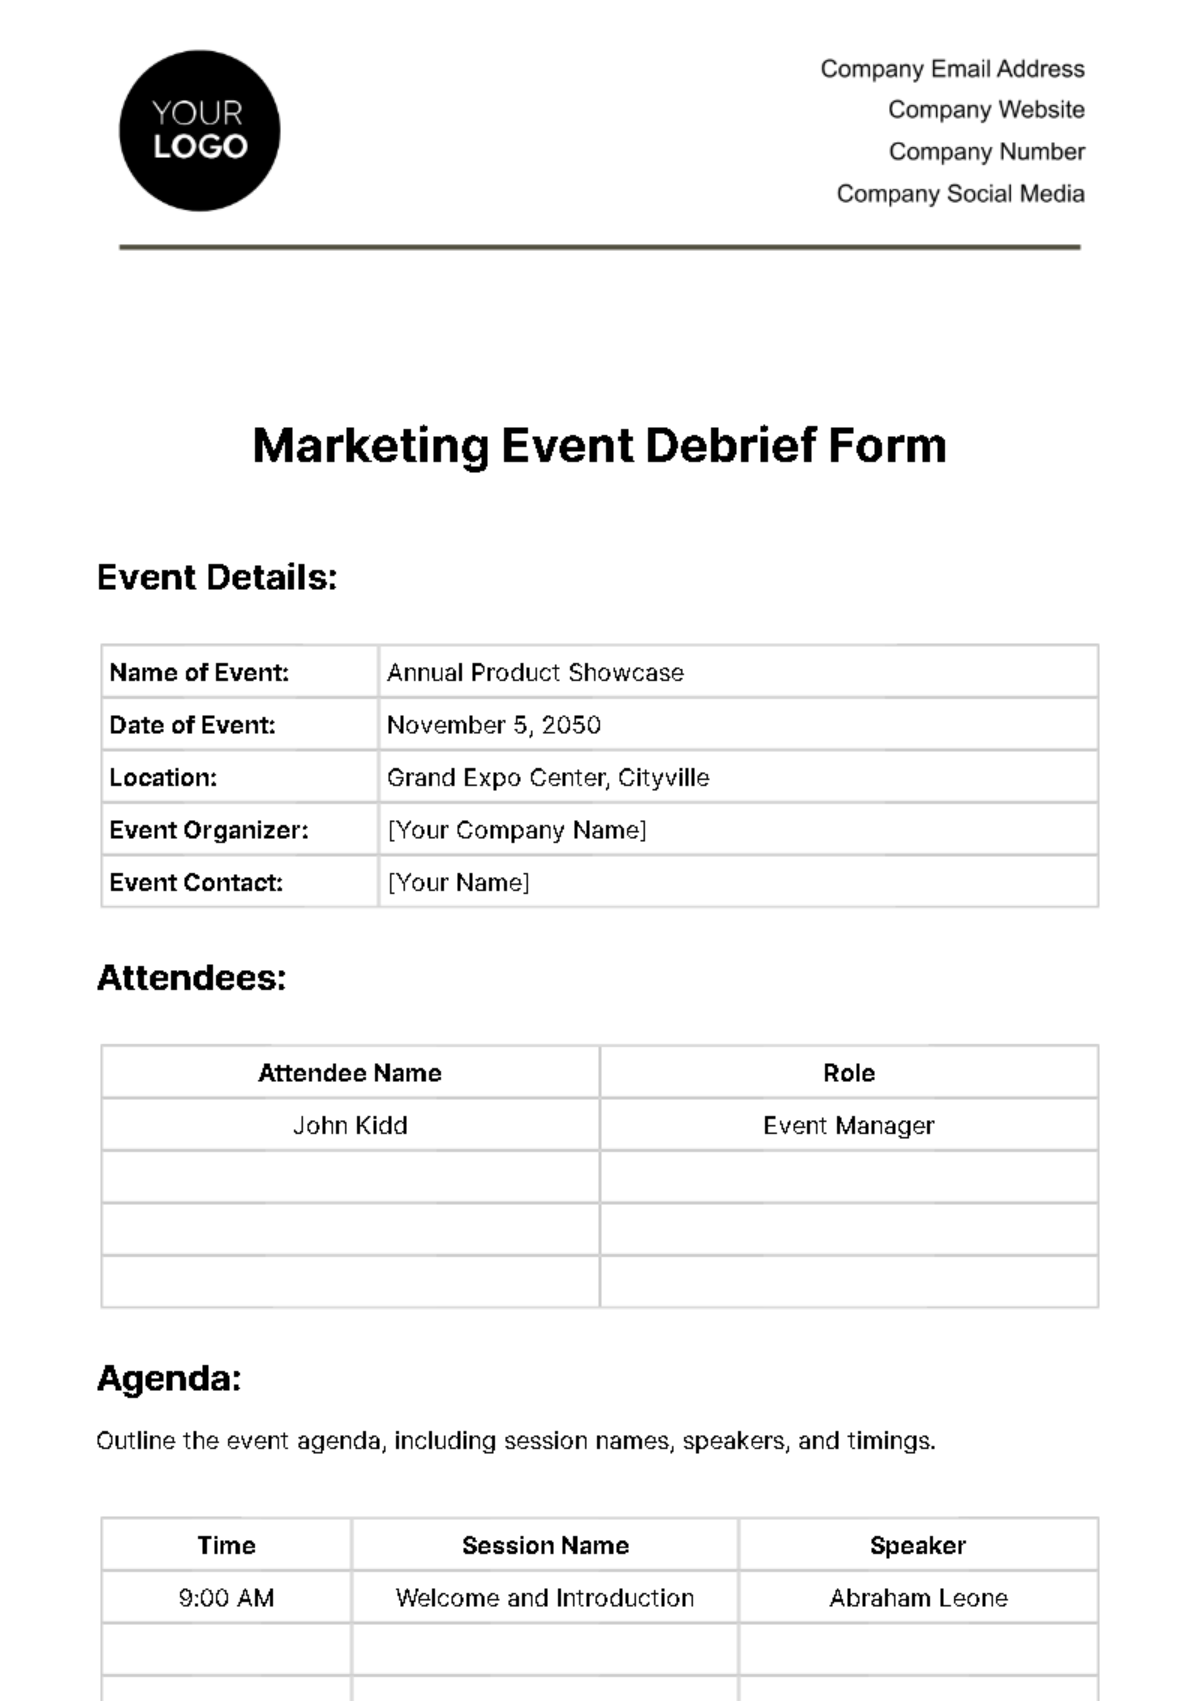 Marketing Event Debrief Form Template